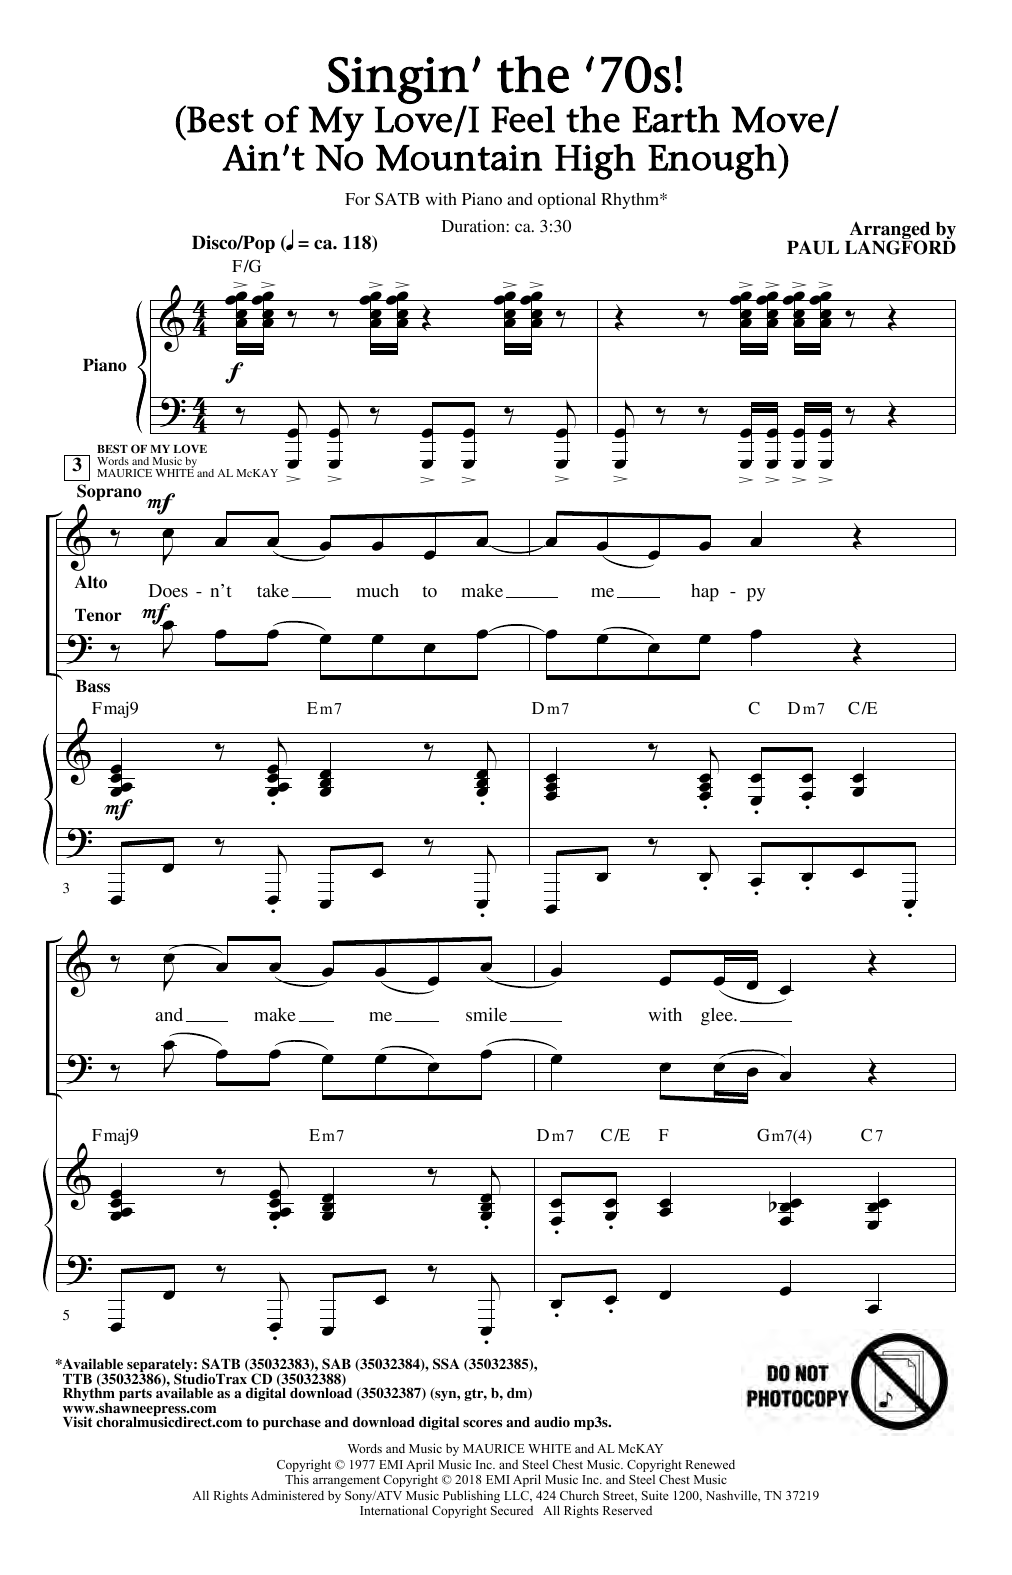 Paul Langford Singin' The 70's (arr. Paul Langford) Sheet Music Notes & Chords for SATB Choir - Download or Print PDF